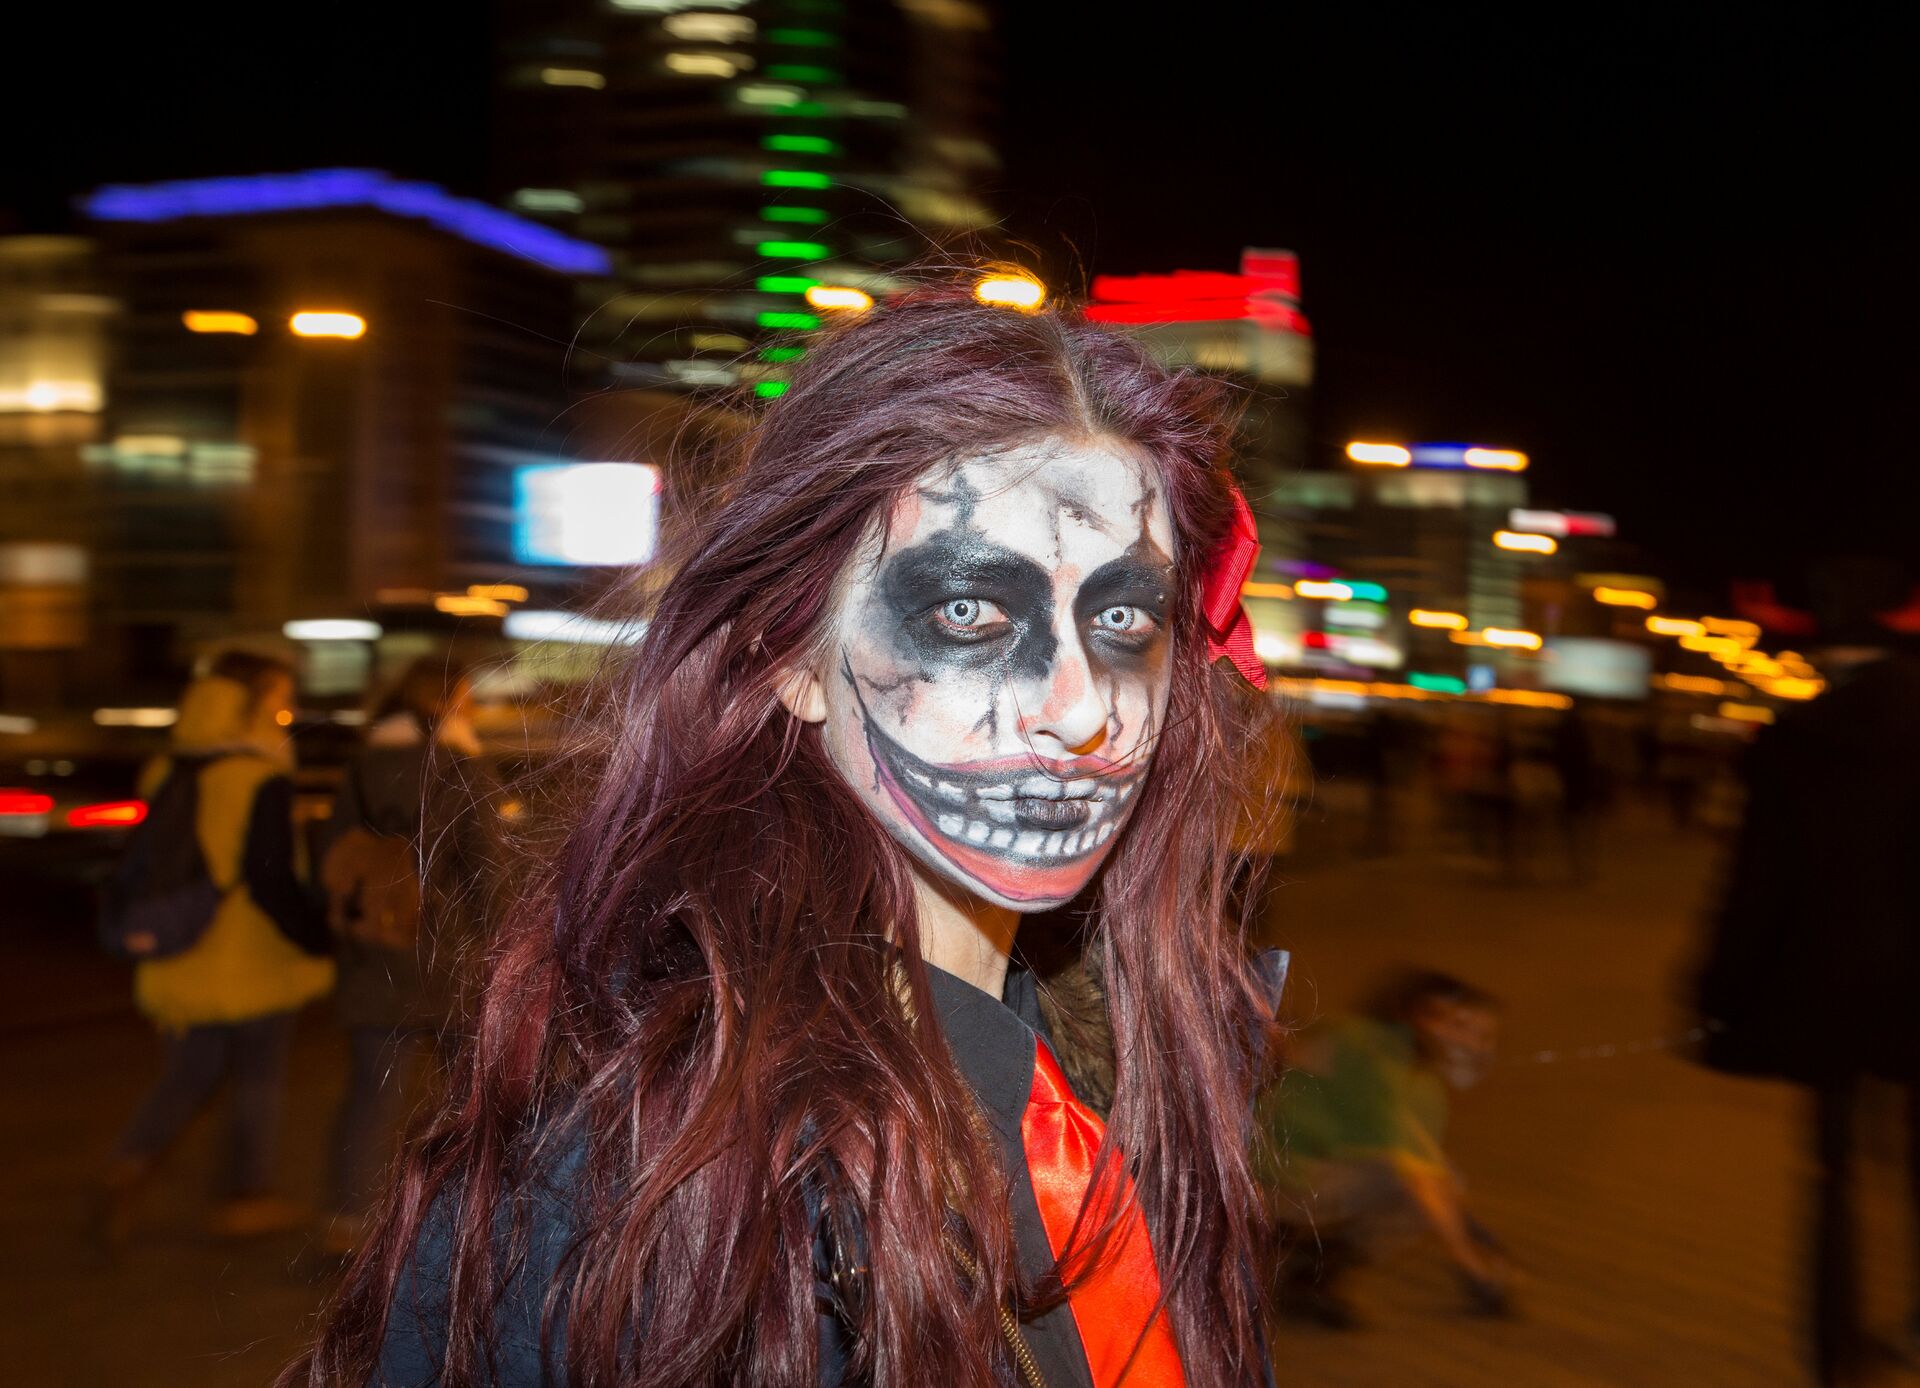 Девушка, лицо которой косметика превратила в маску зомби, отмечает Хэллоуин в Минске, Беларусь - Sputnik Грузия, 1920, 28.10.2021